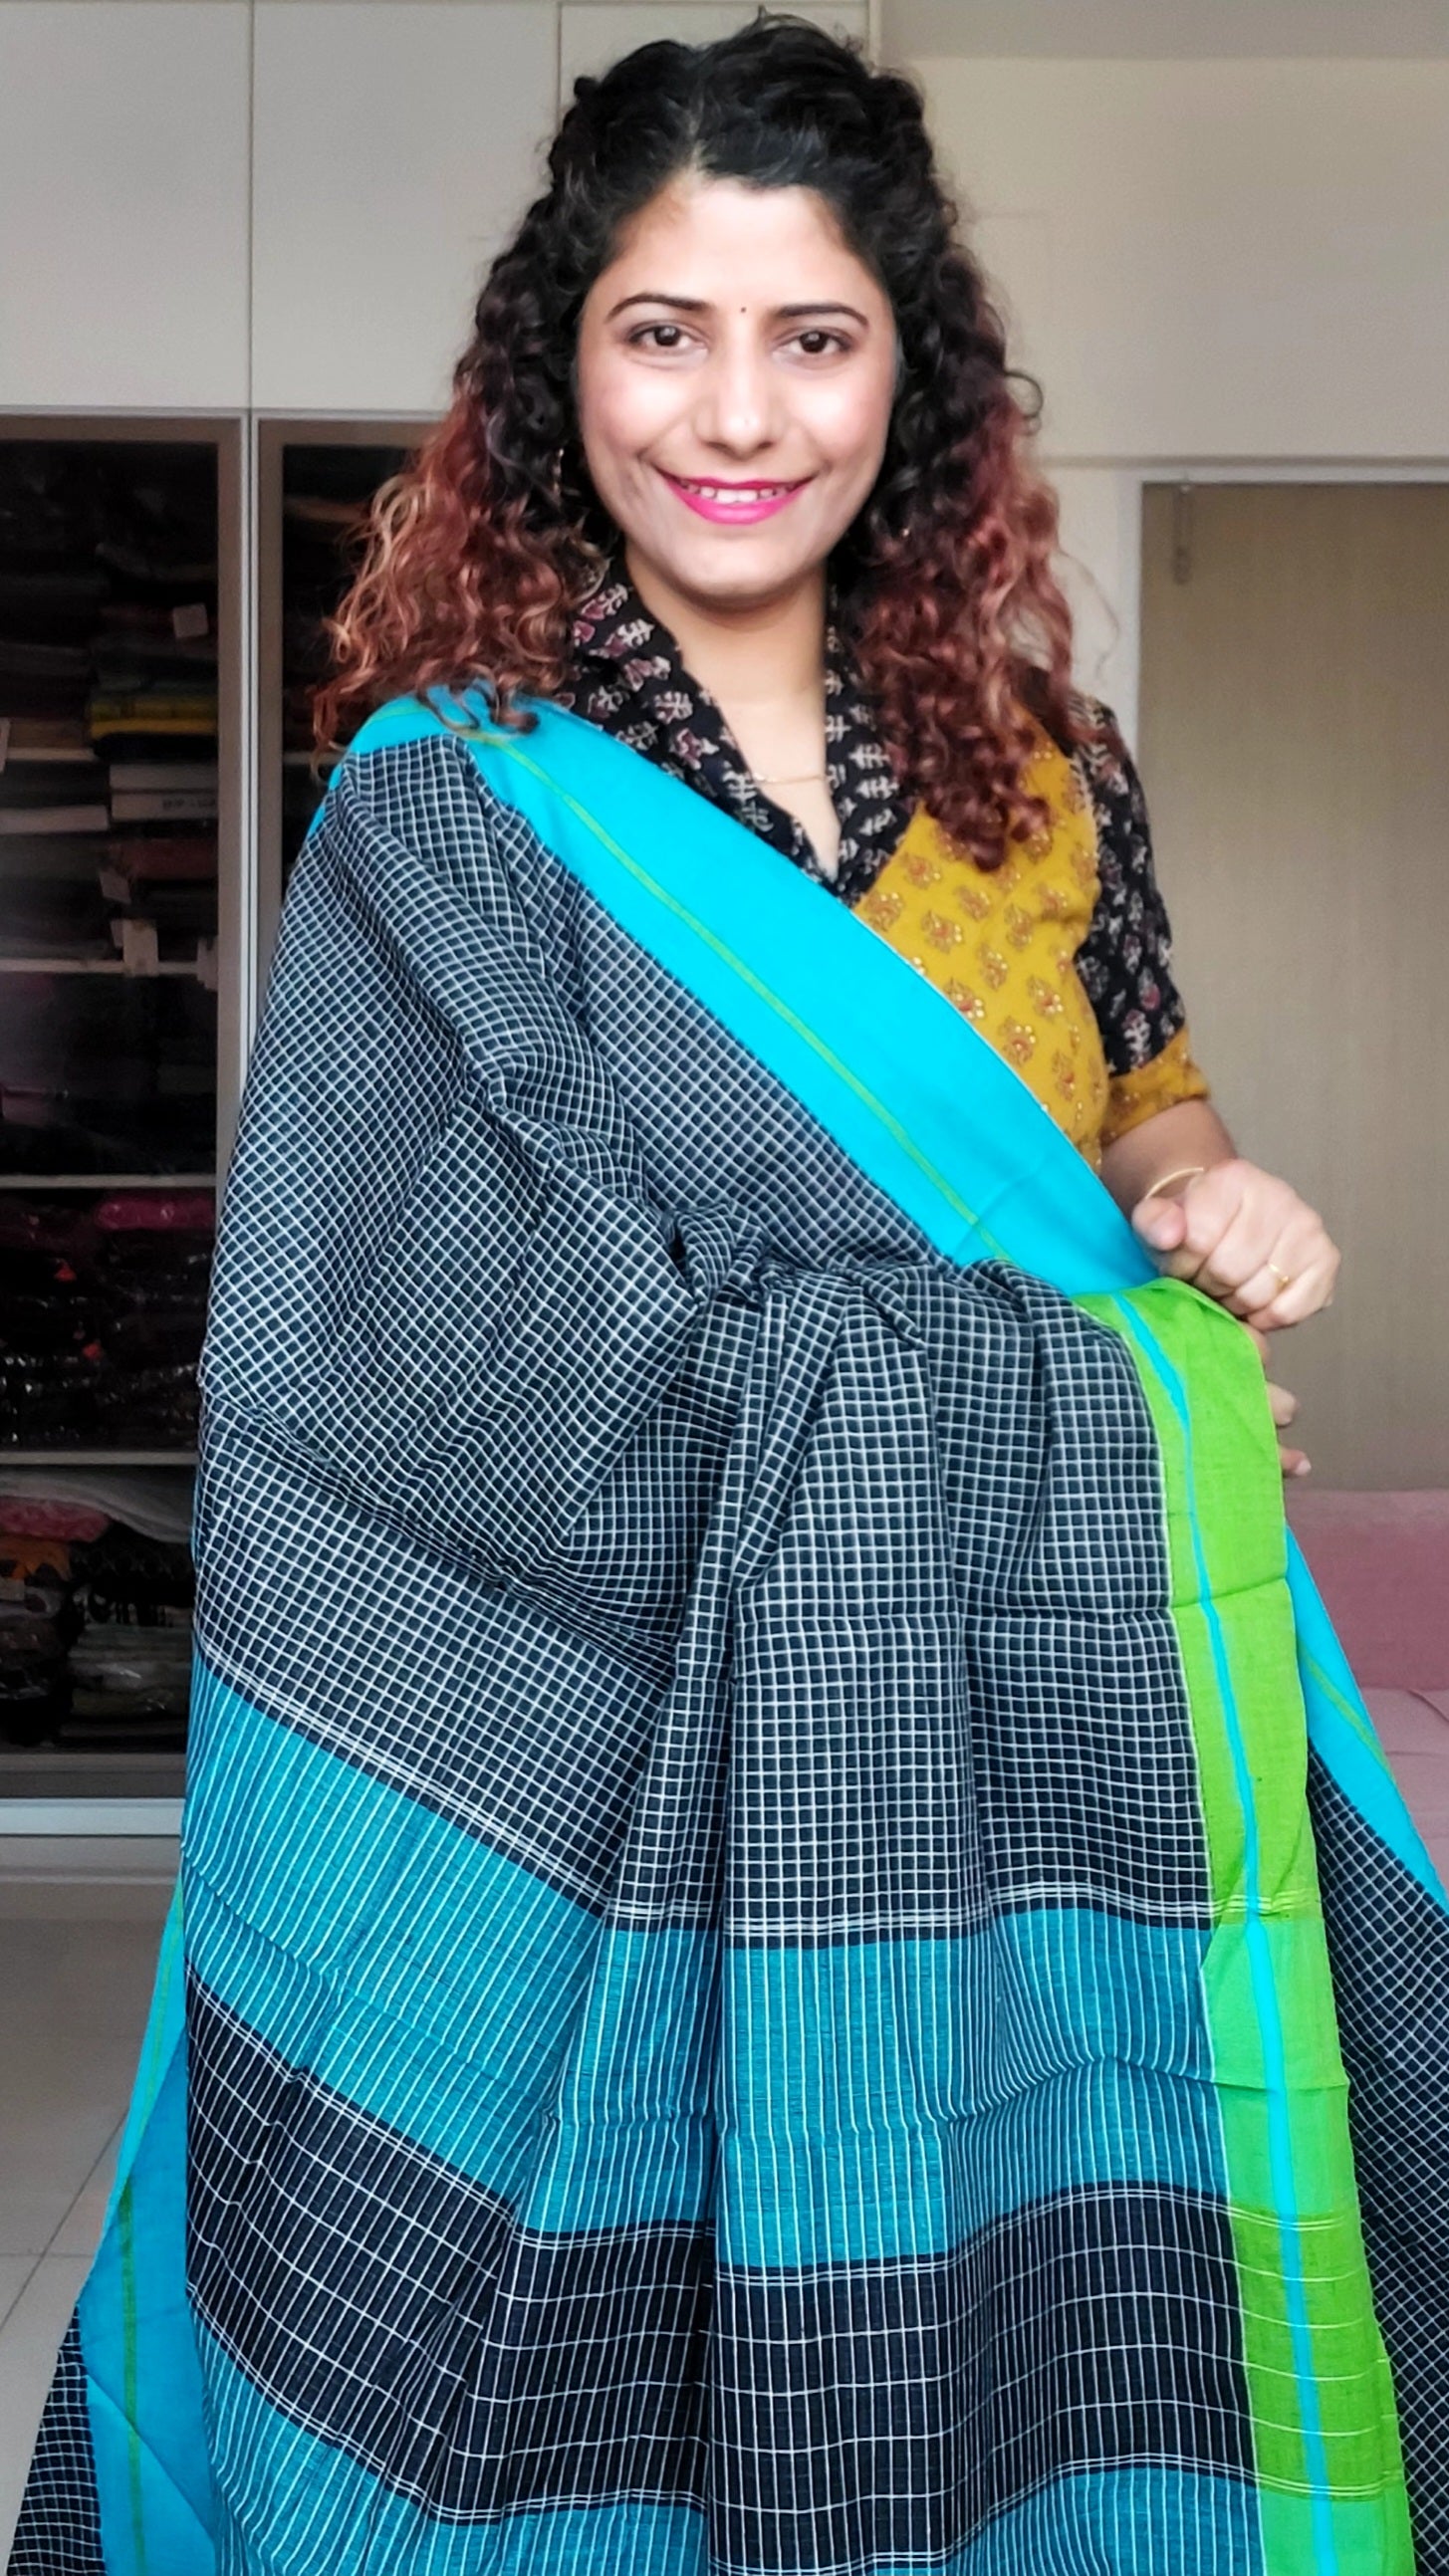 Black Patteda Anchu Cotton Saree With Ganga Jamuna Border- Blue Green